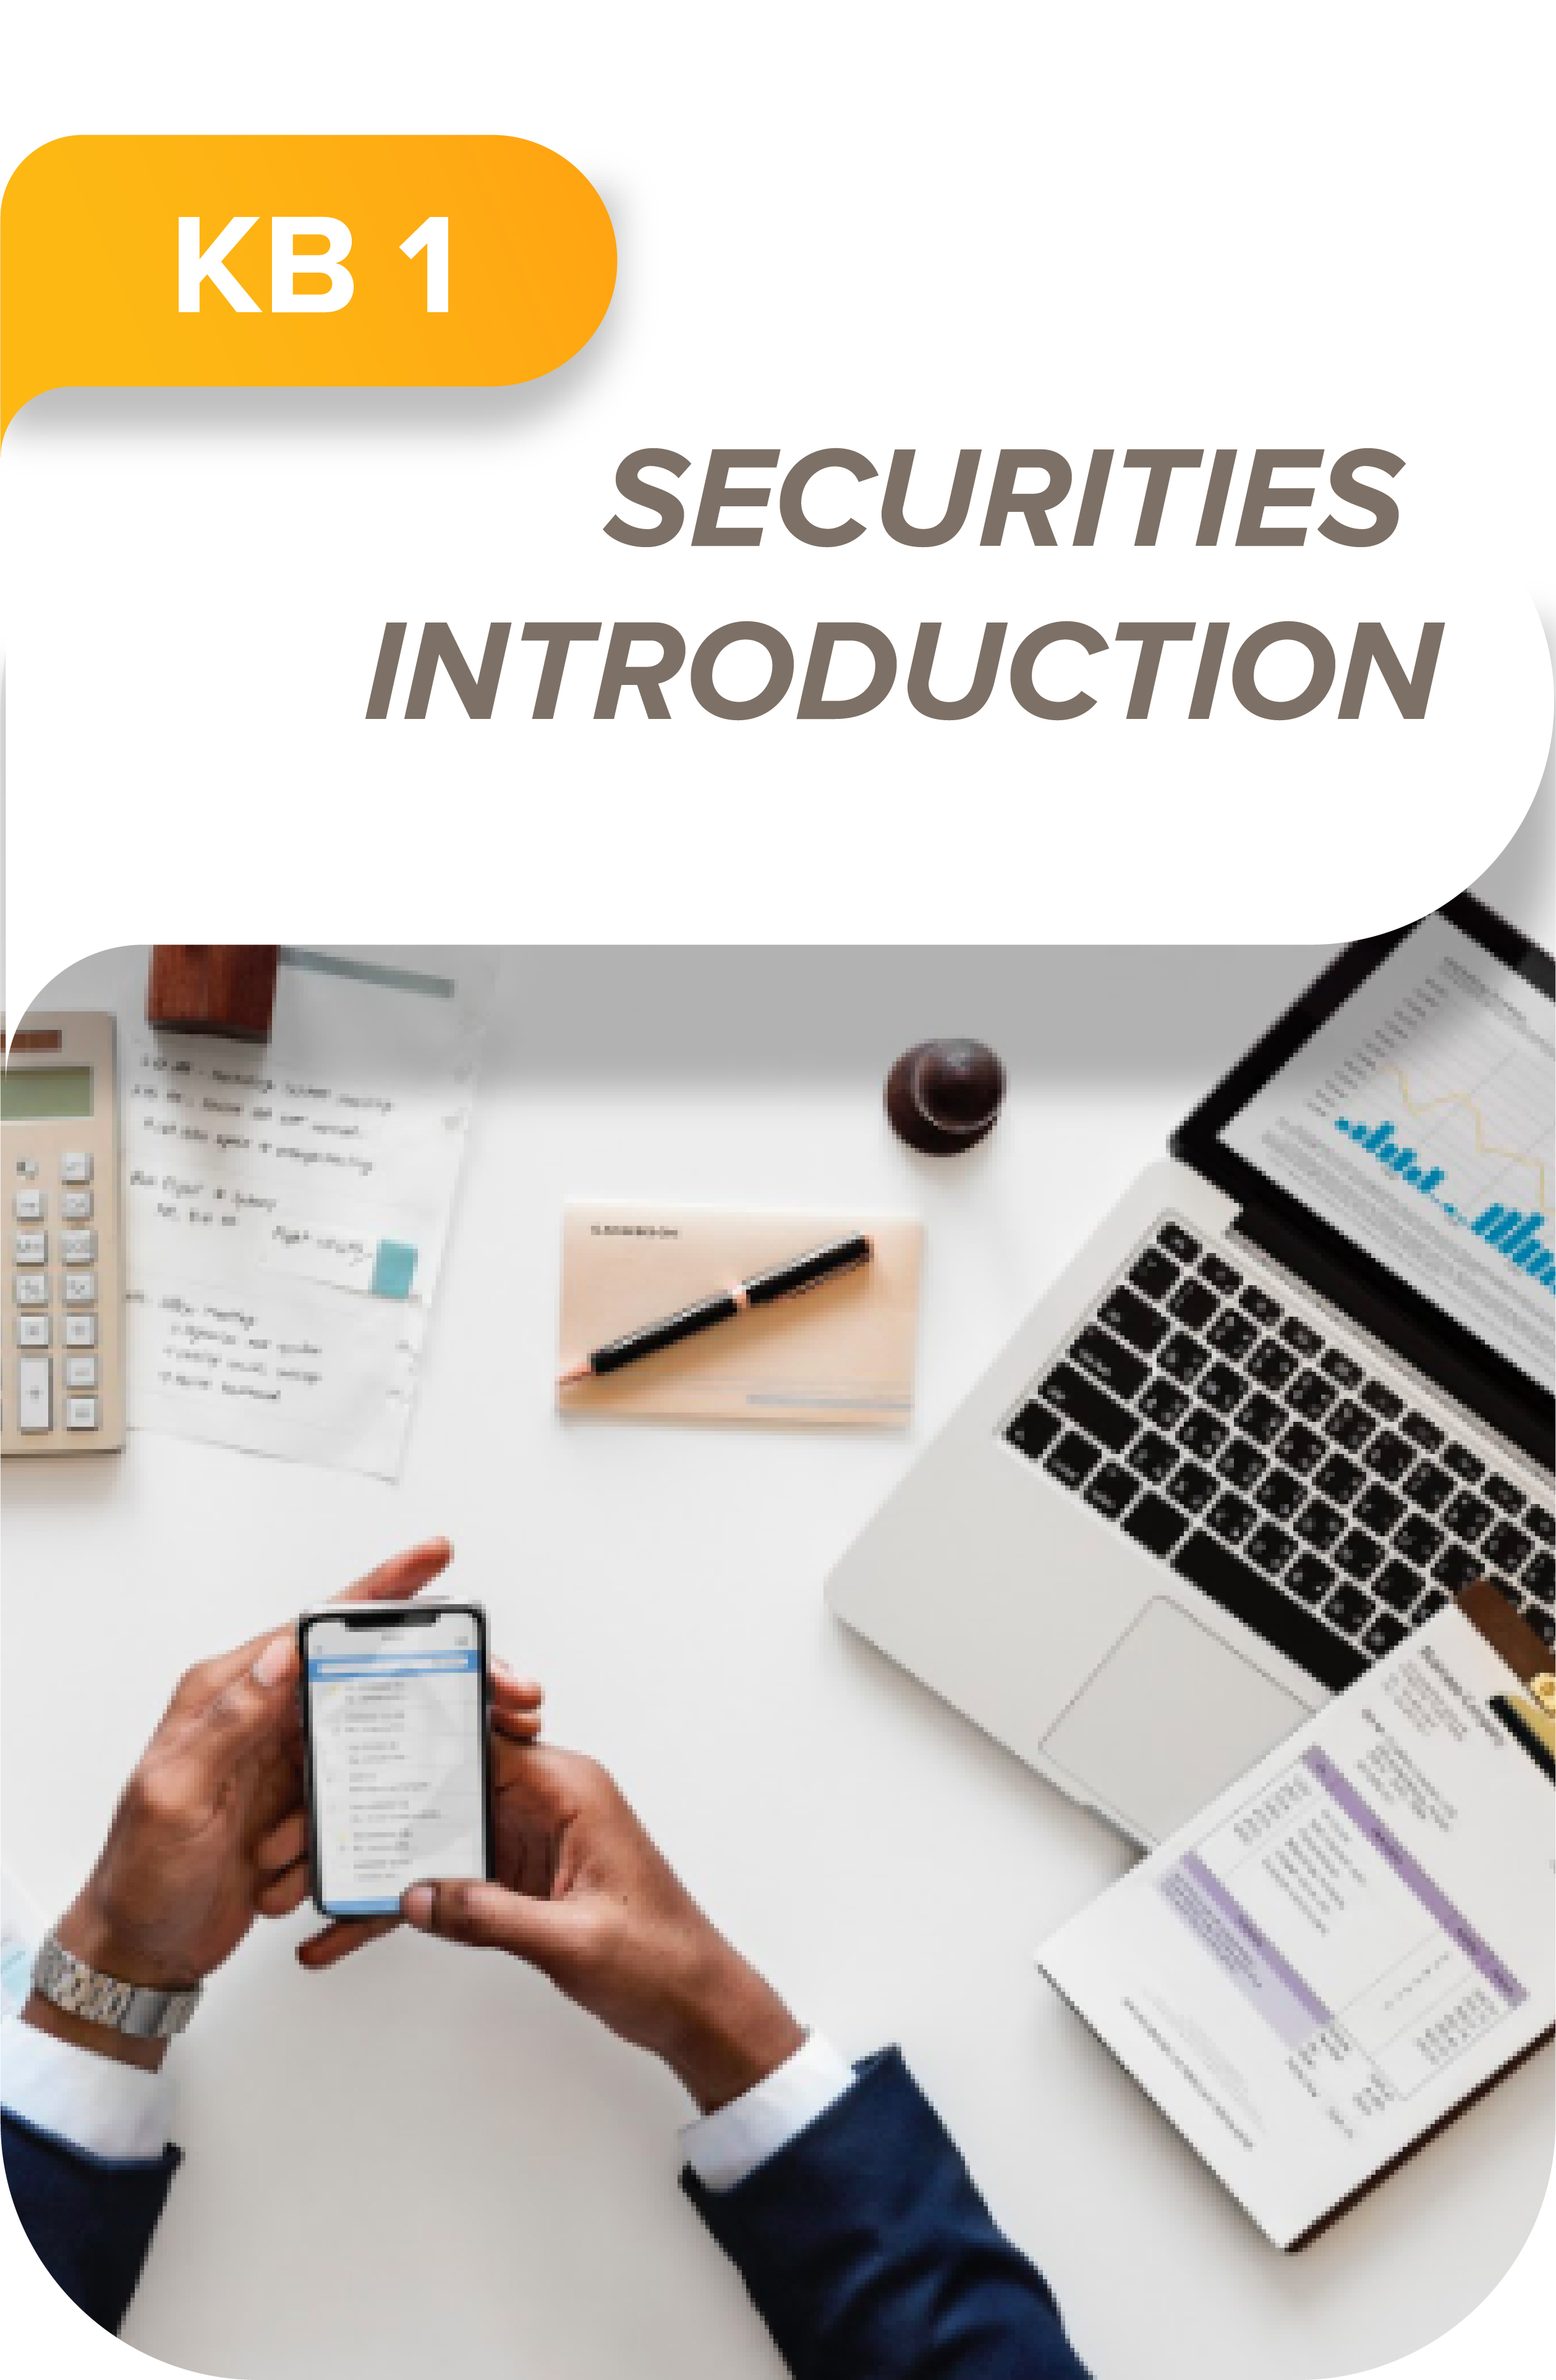 Securities introduction